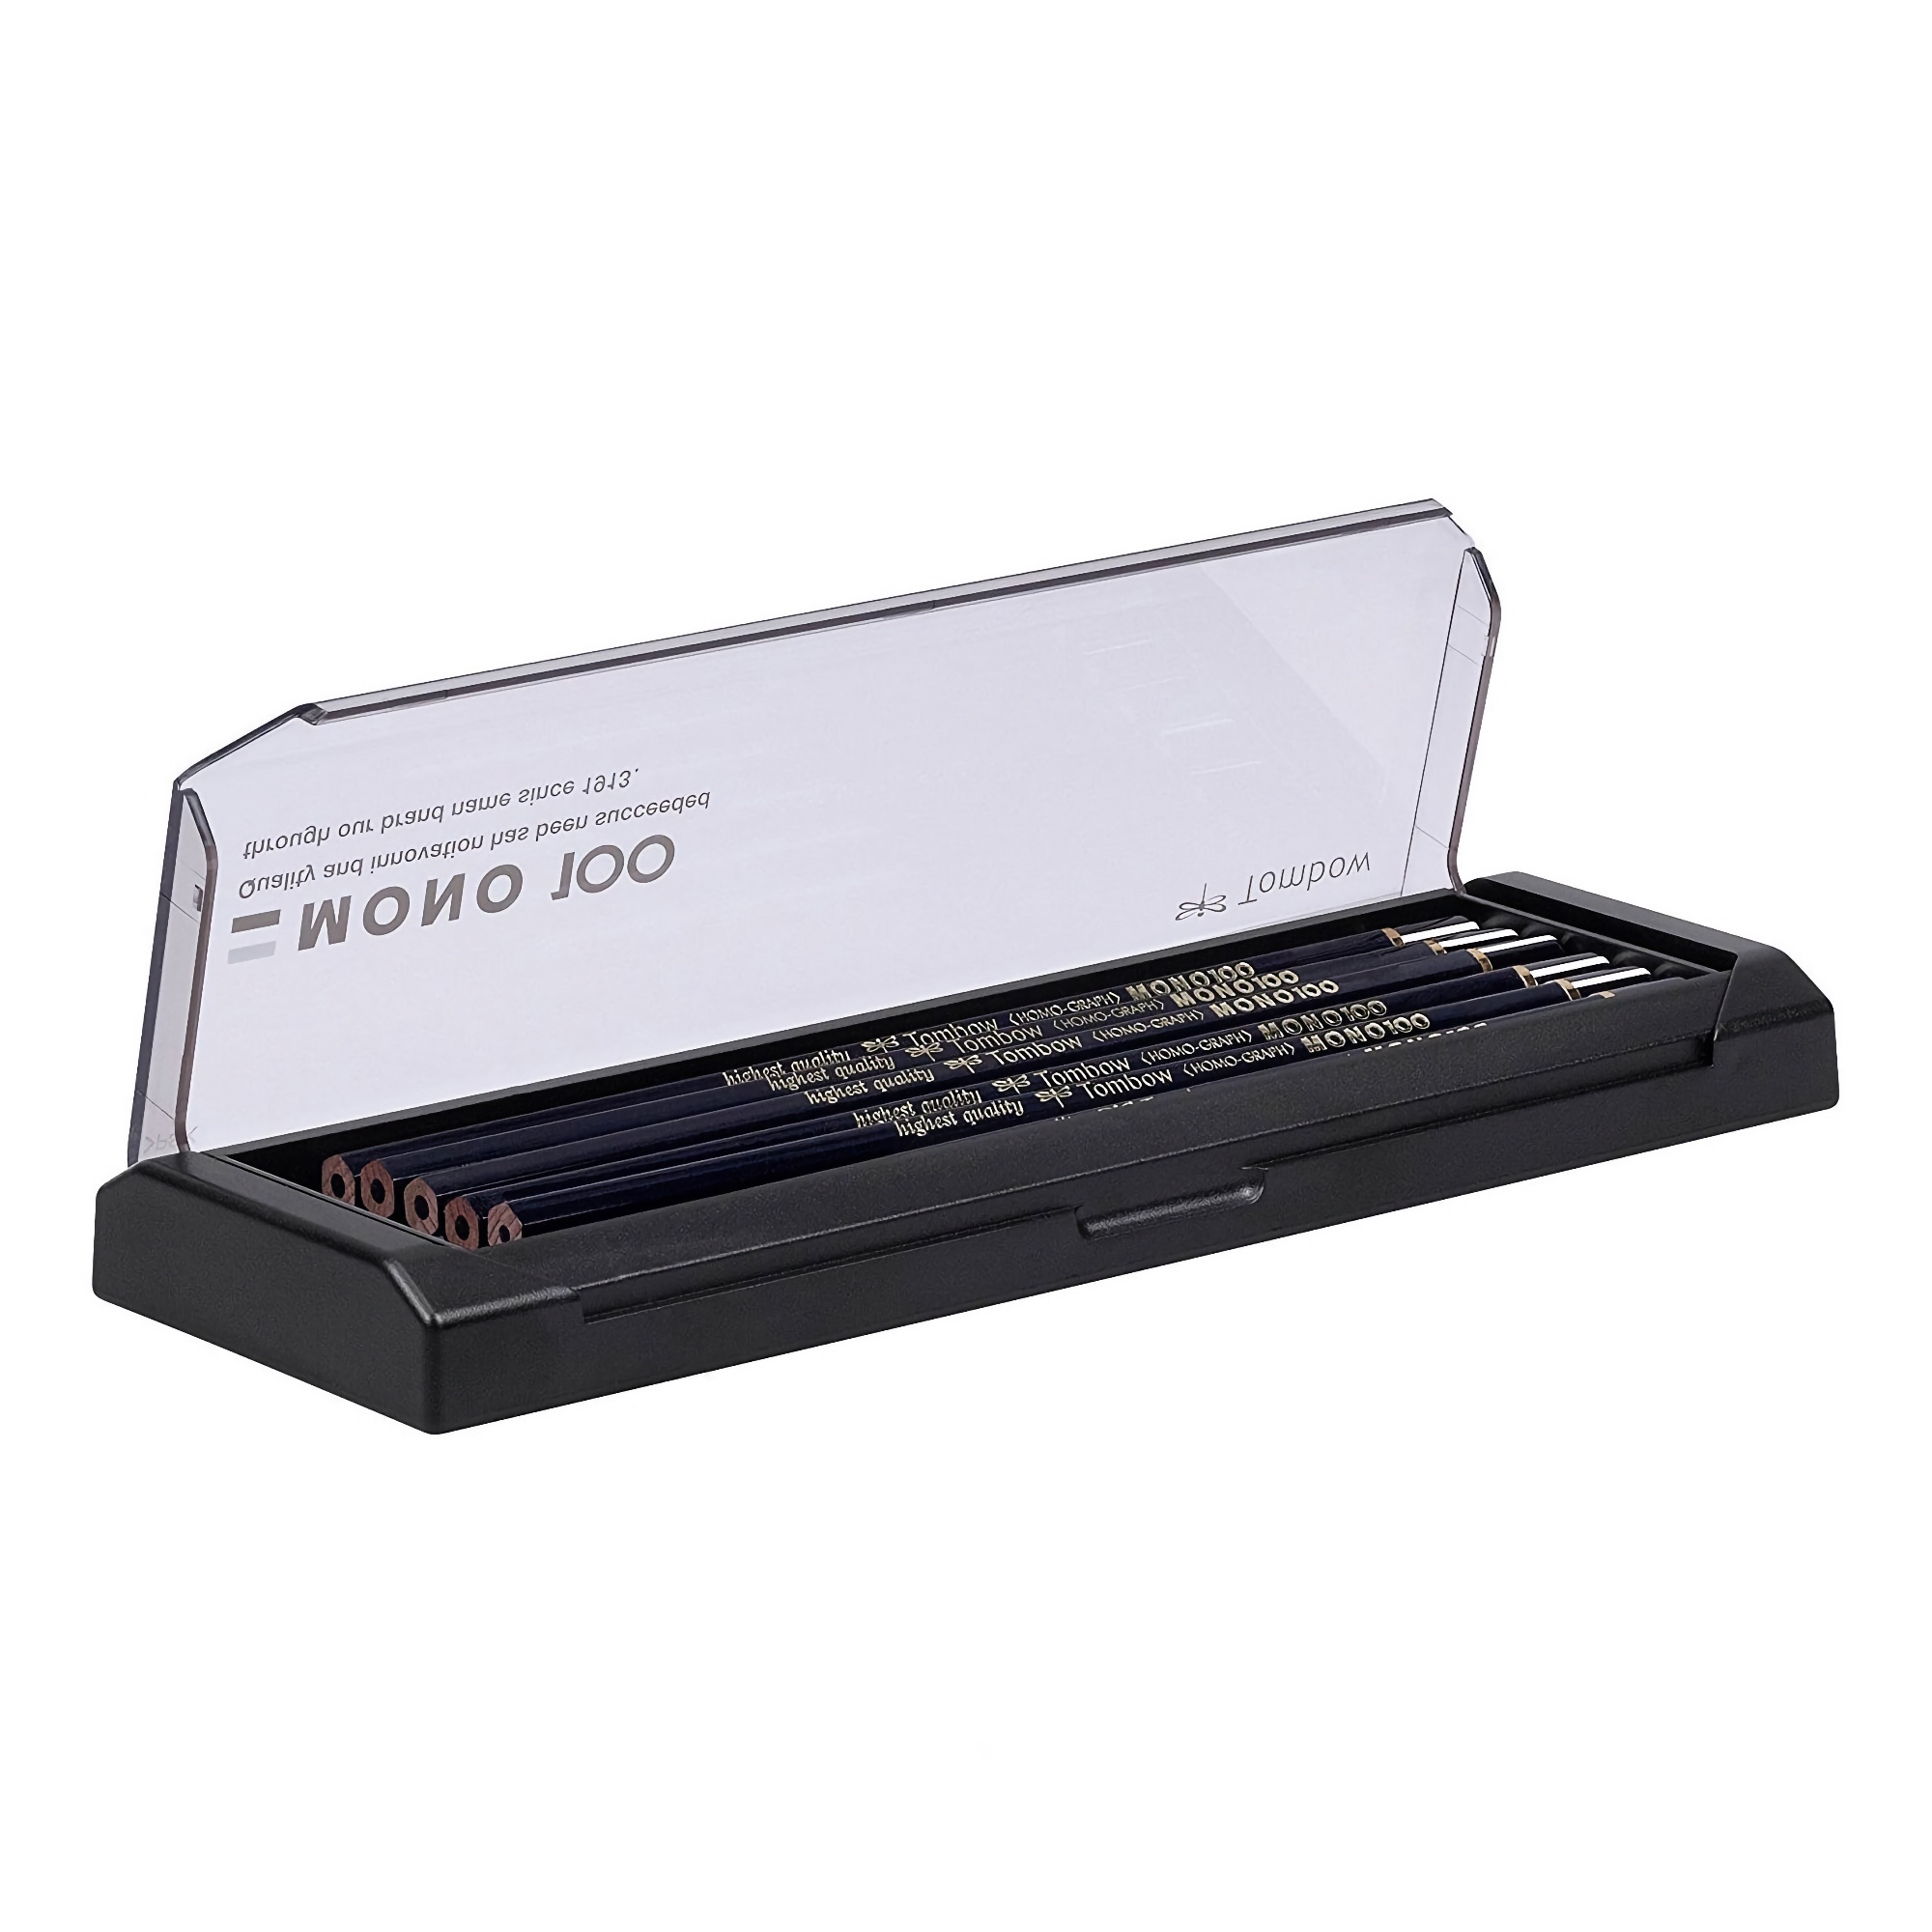 Tombow Mono 100 Pencil – 6H – set om 12